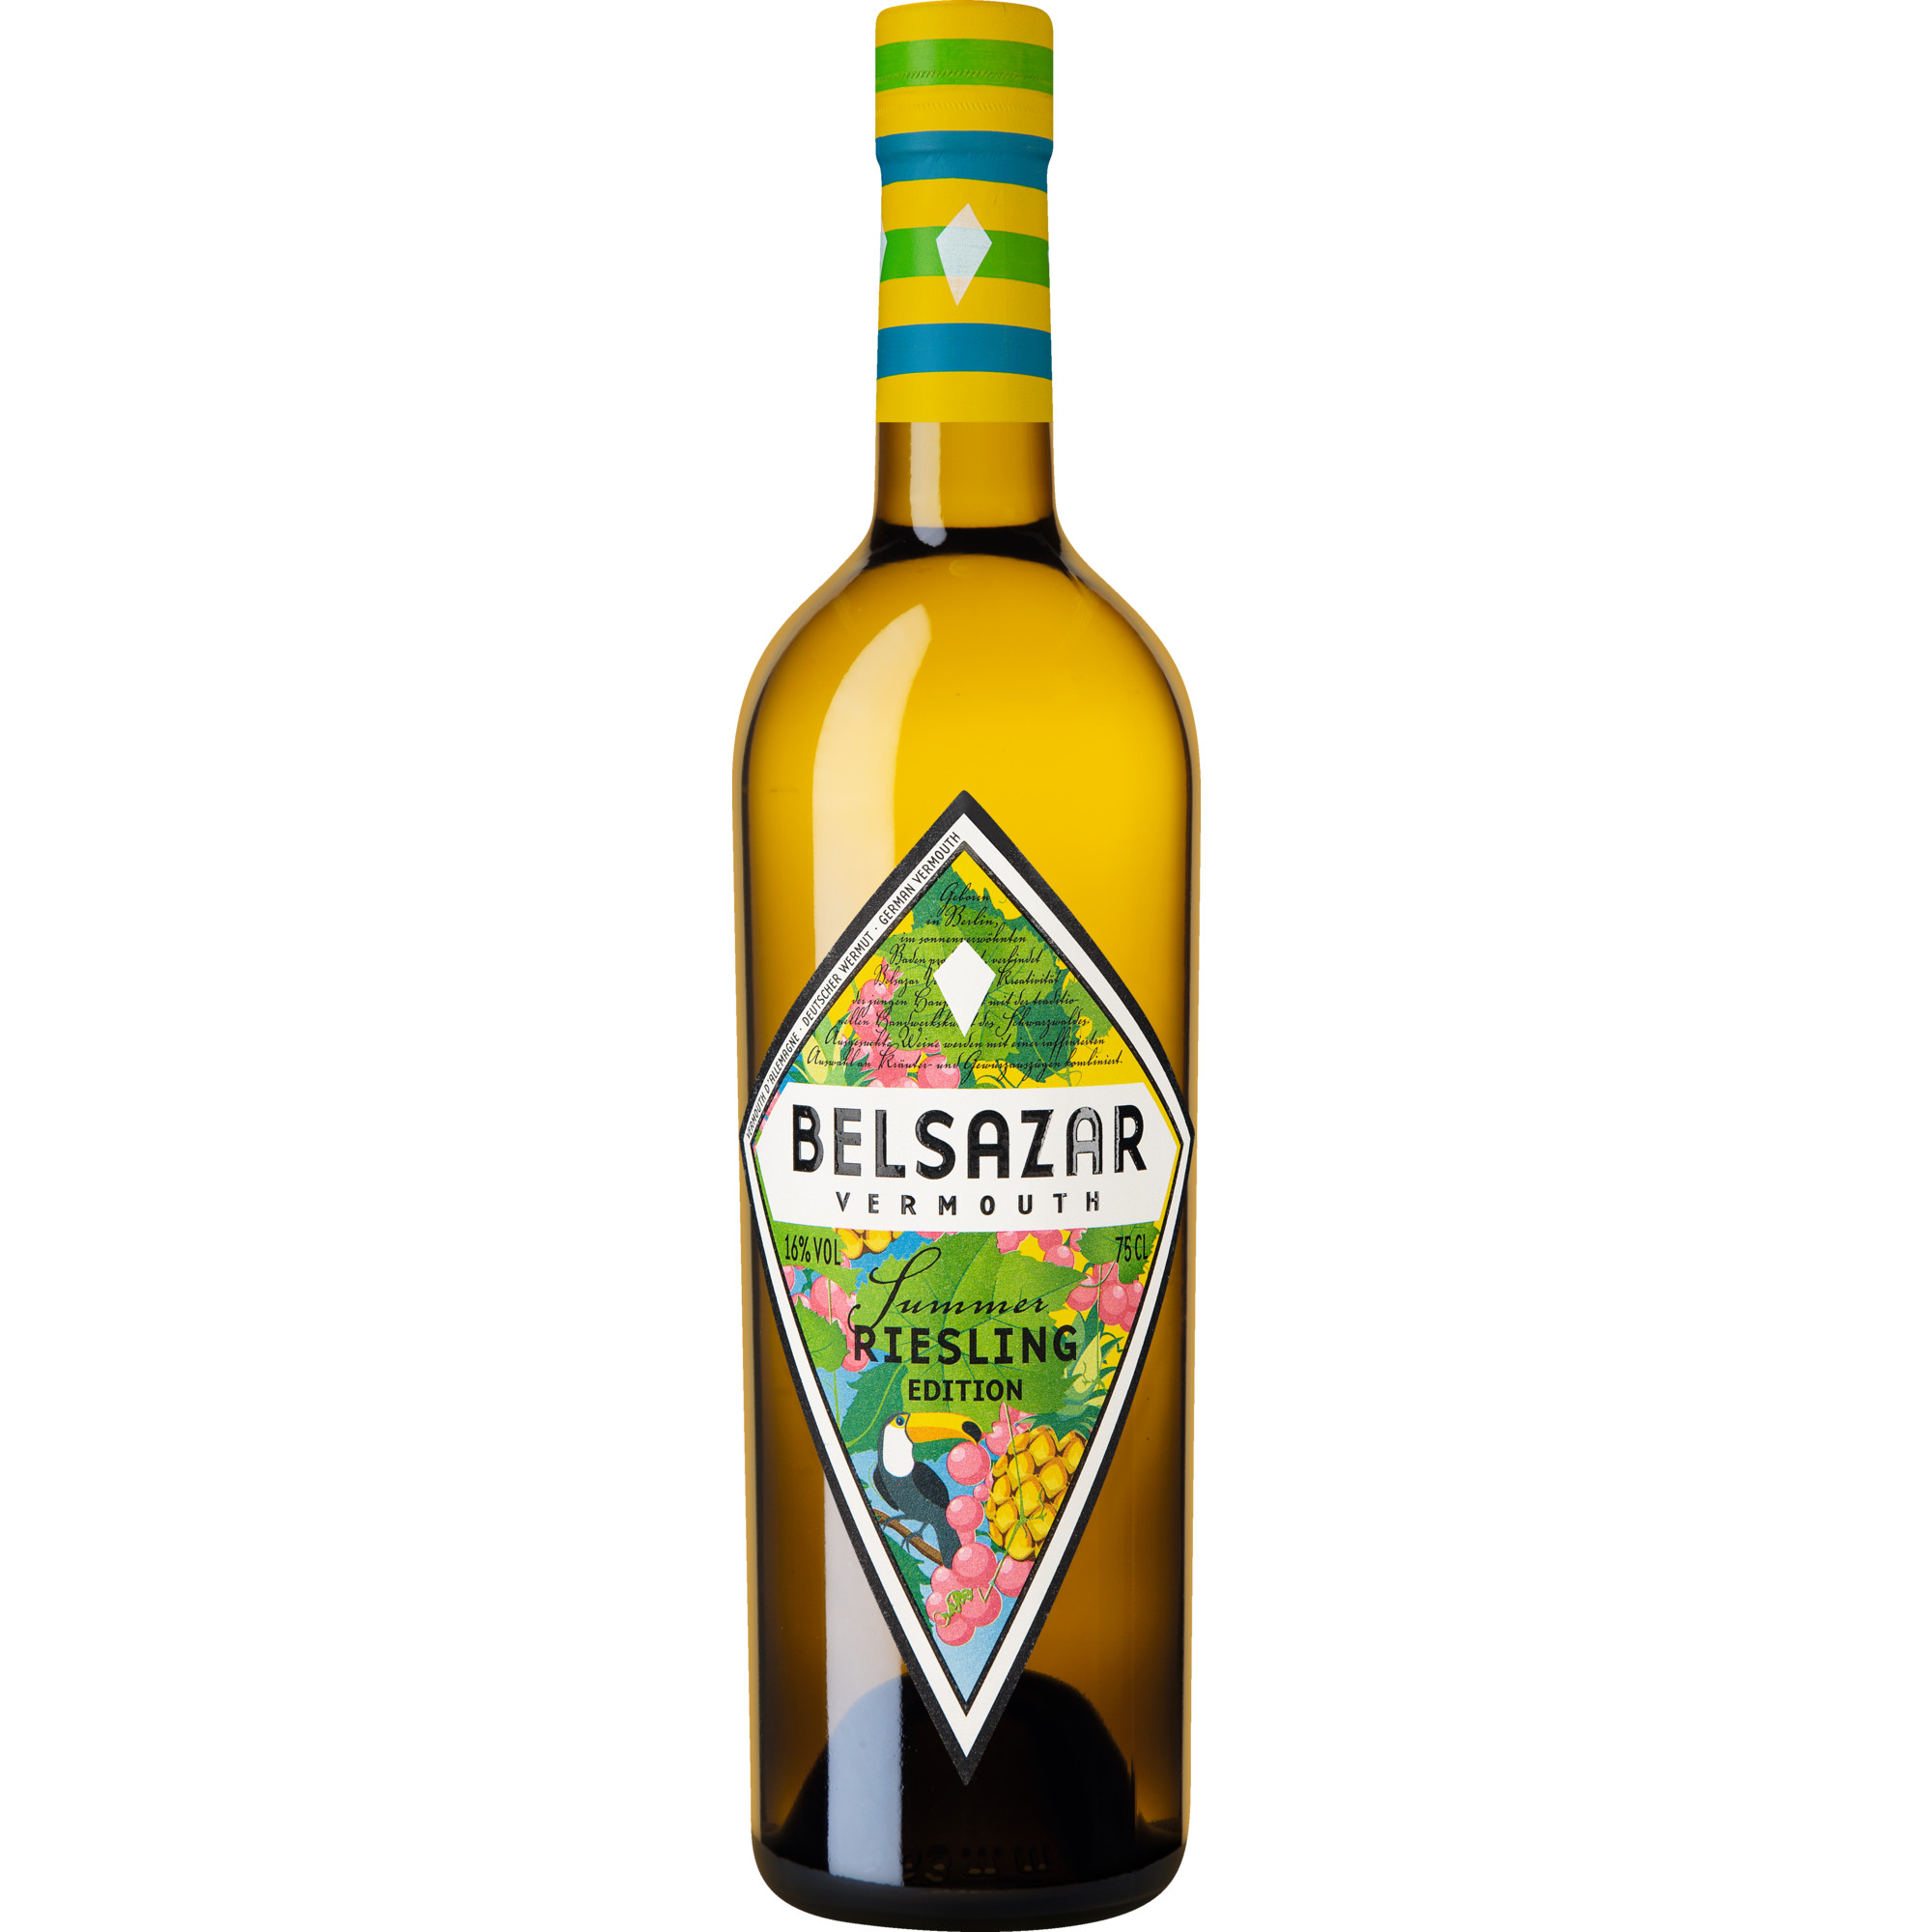 Belsazar Dr. Loosen Riesling Vermouth, 0,75 L, 16% Vol., Spirituosen Belsazar GmbH, Potsdamer Str. 91, DE - 10785 Berlin Hawesko DE